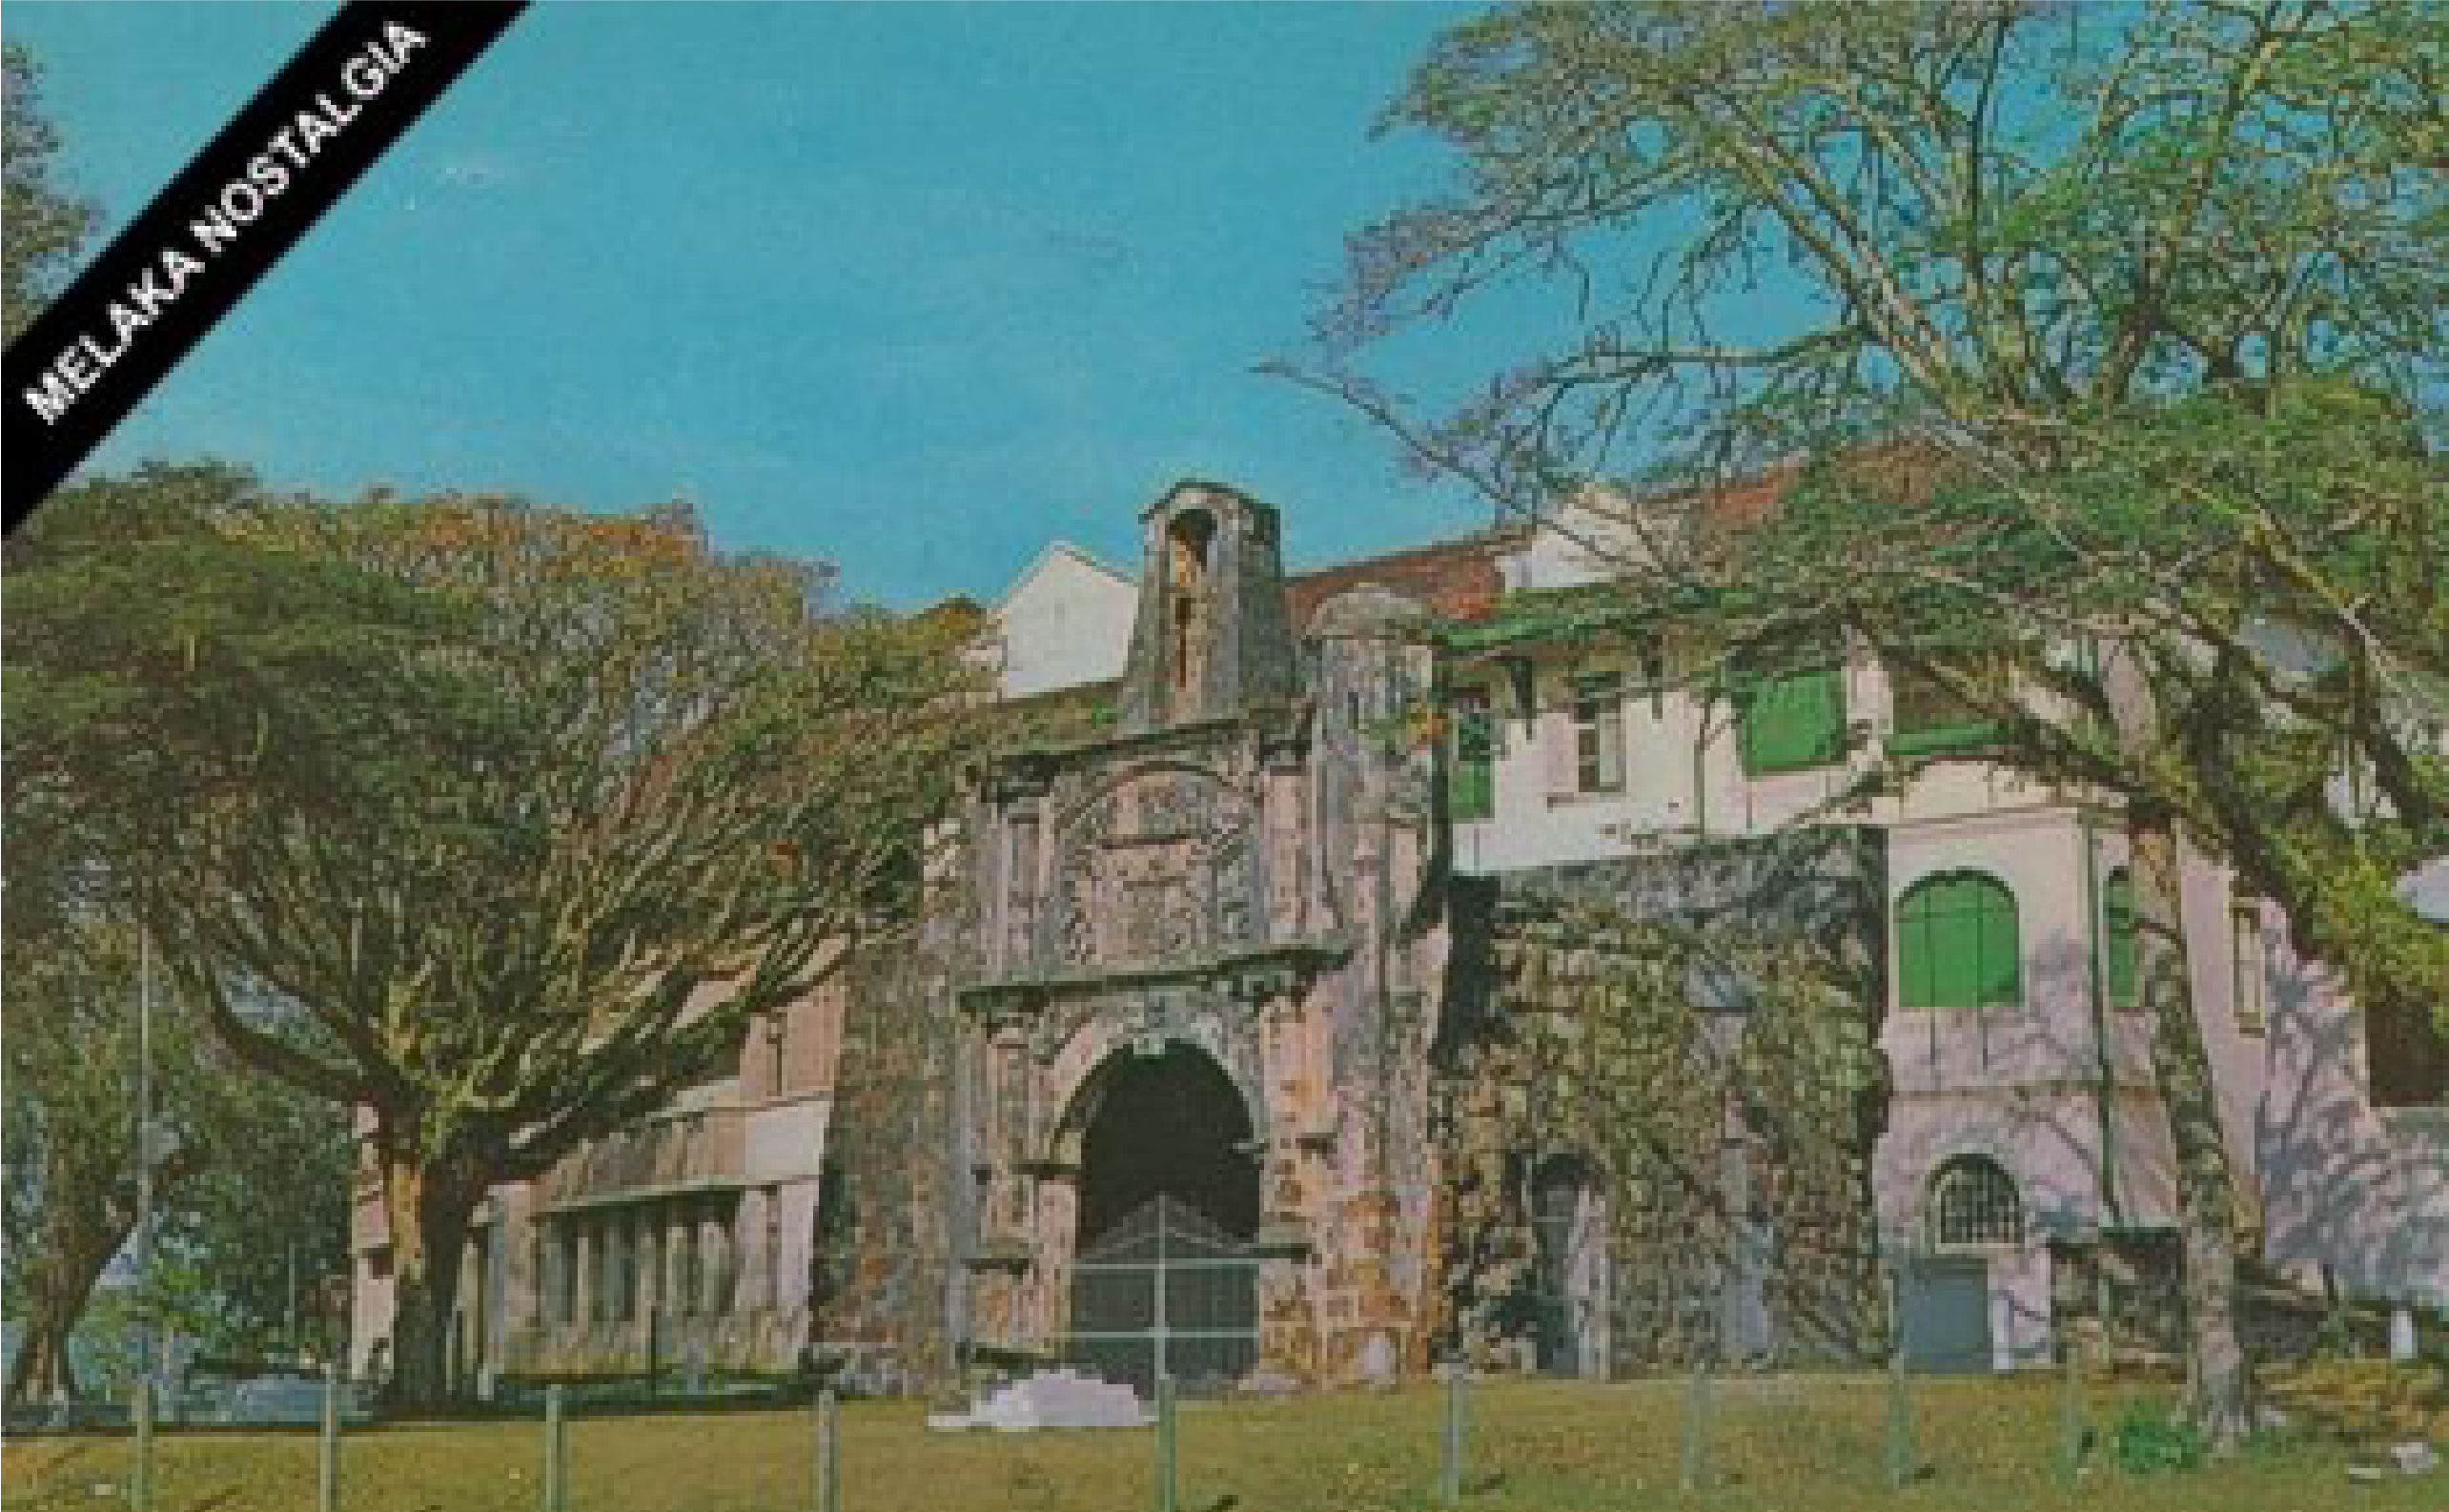 Porta De Santiago circa 1960 (source: Melaka Nostalgia)